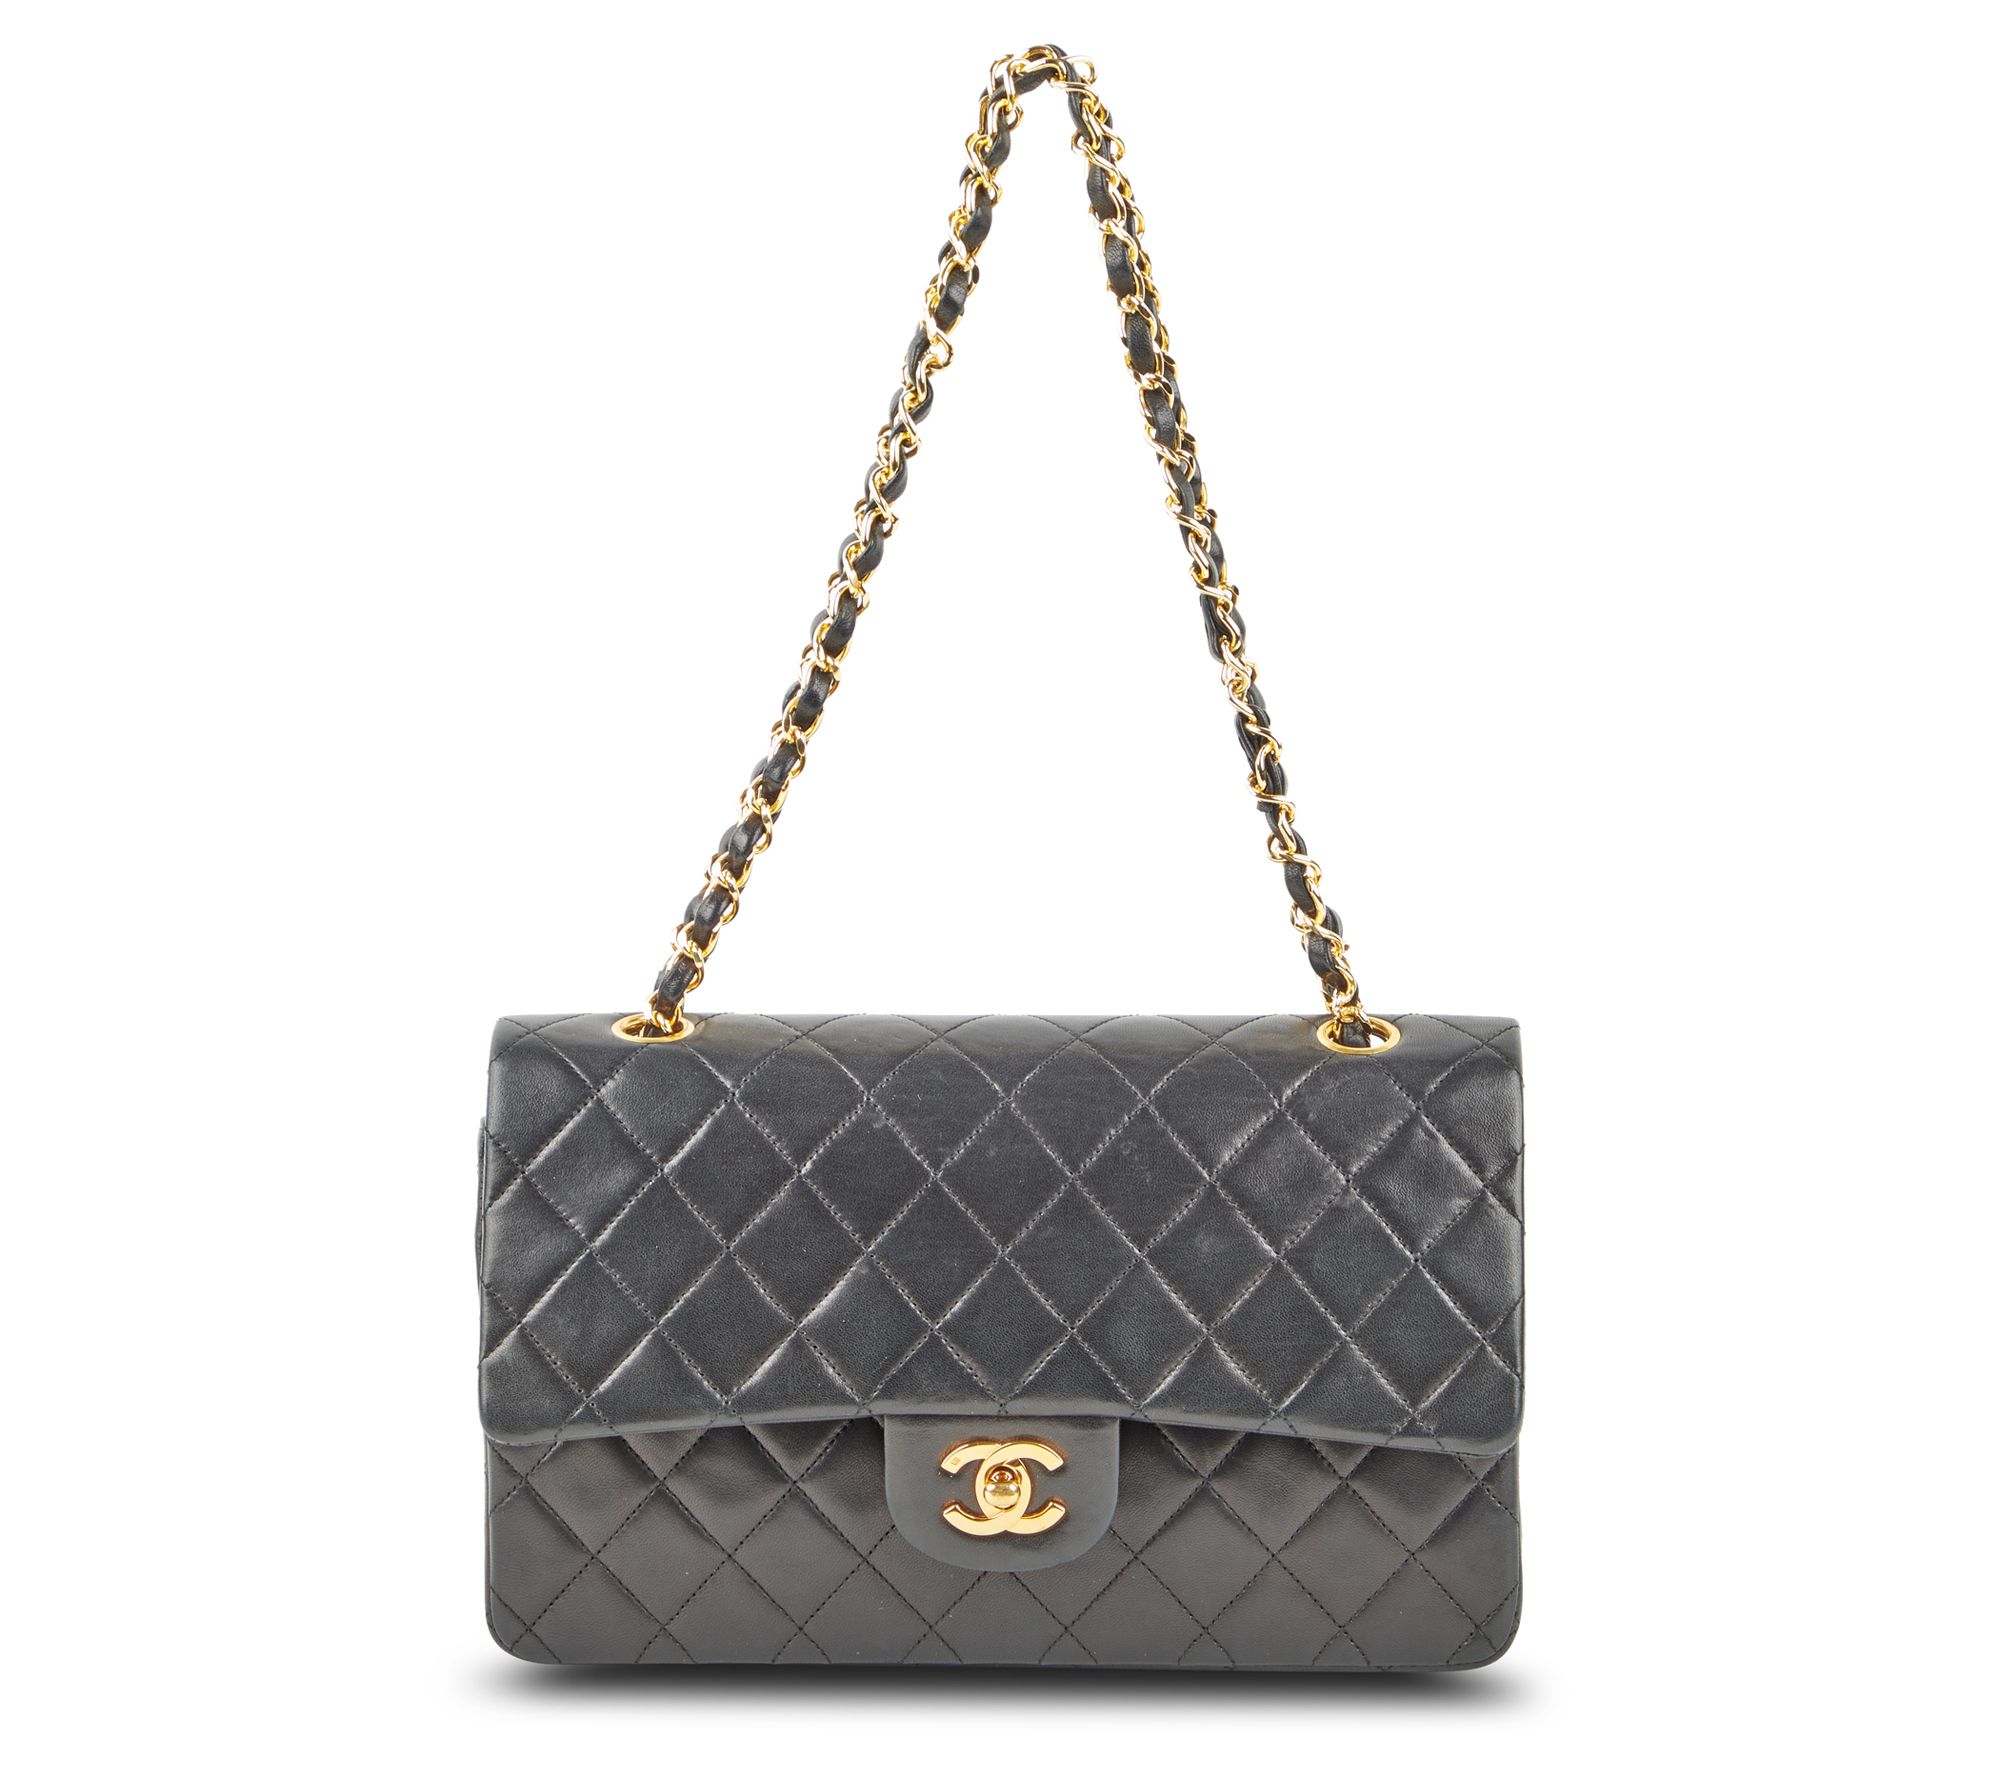 Chanel Retro Class Small Flap Bag